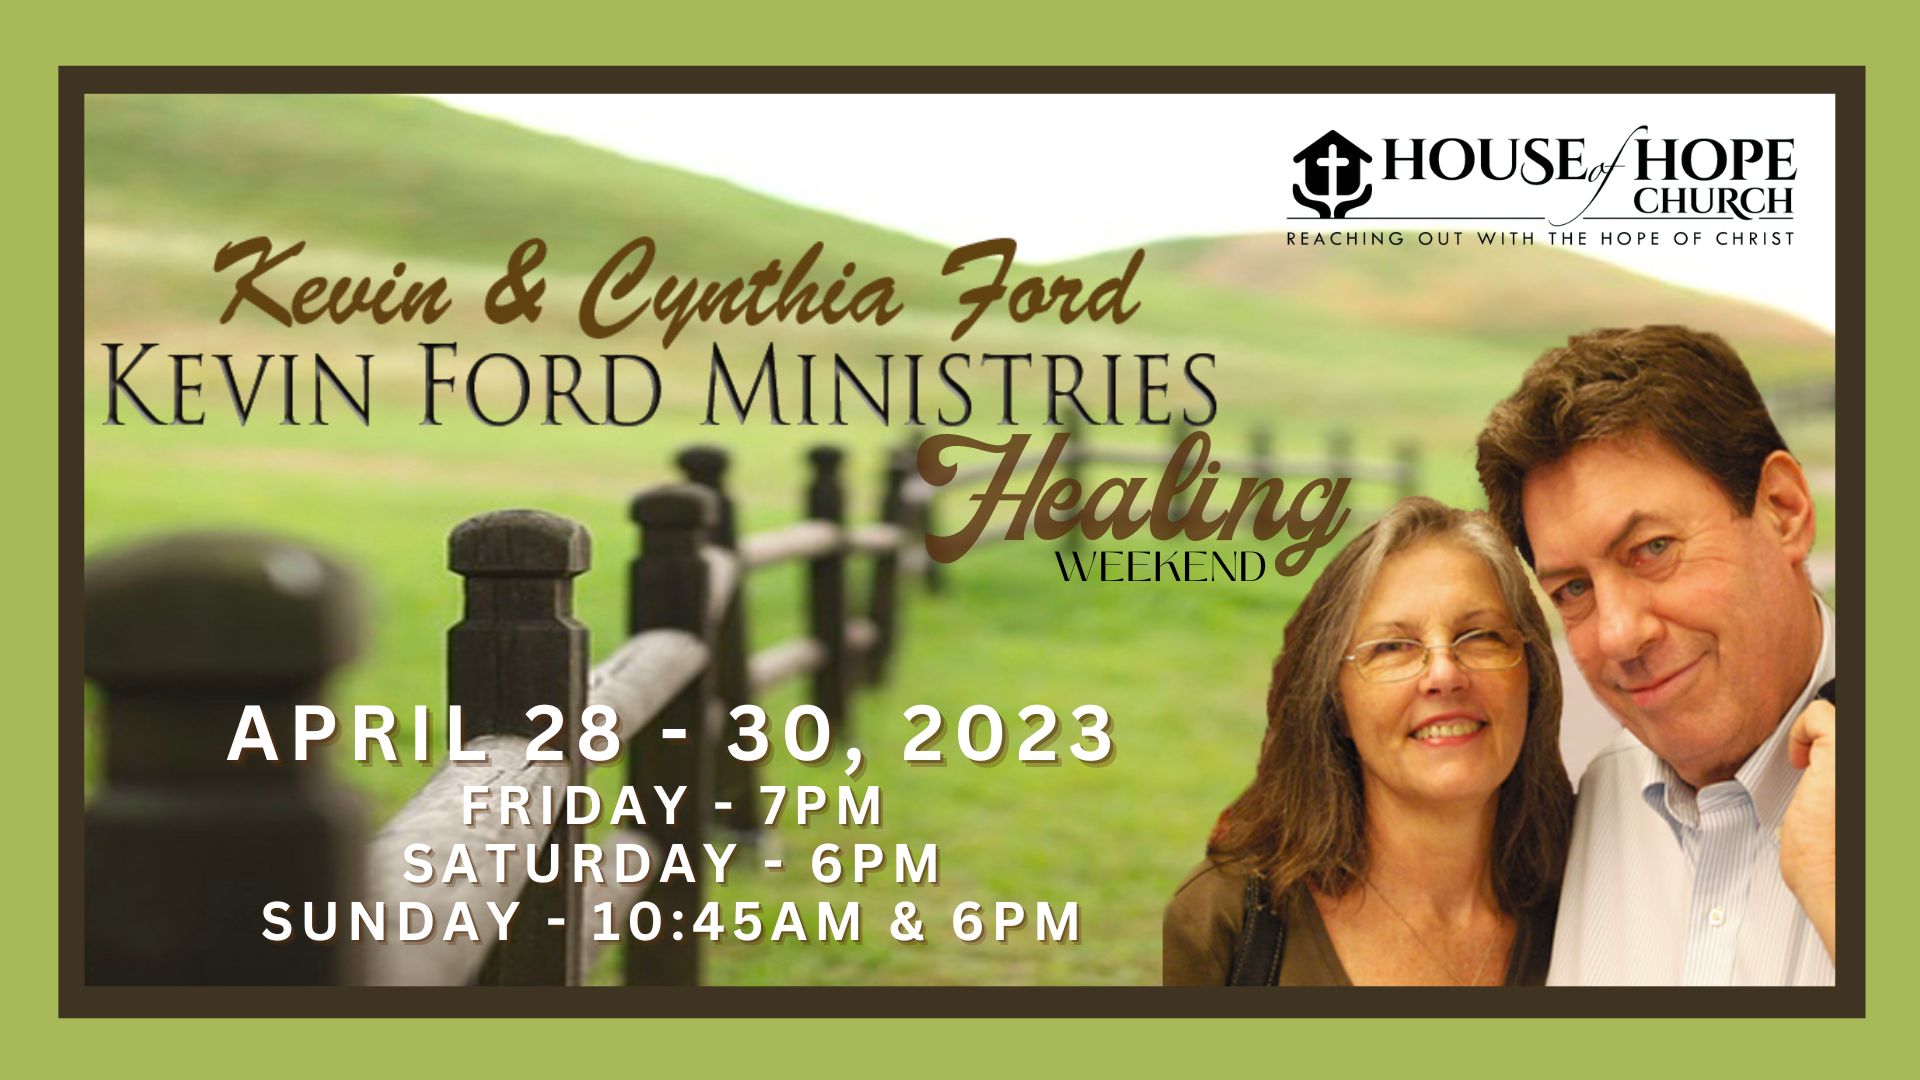 House of Hope Church – Healing Weekend